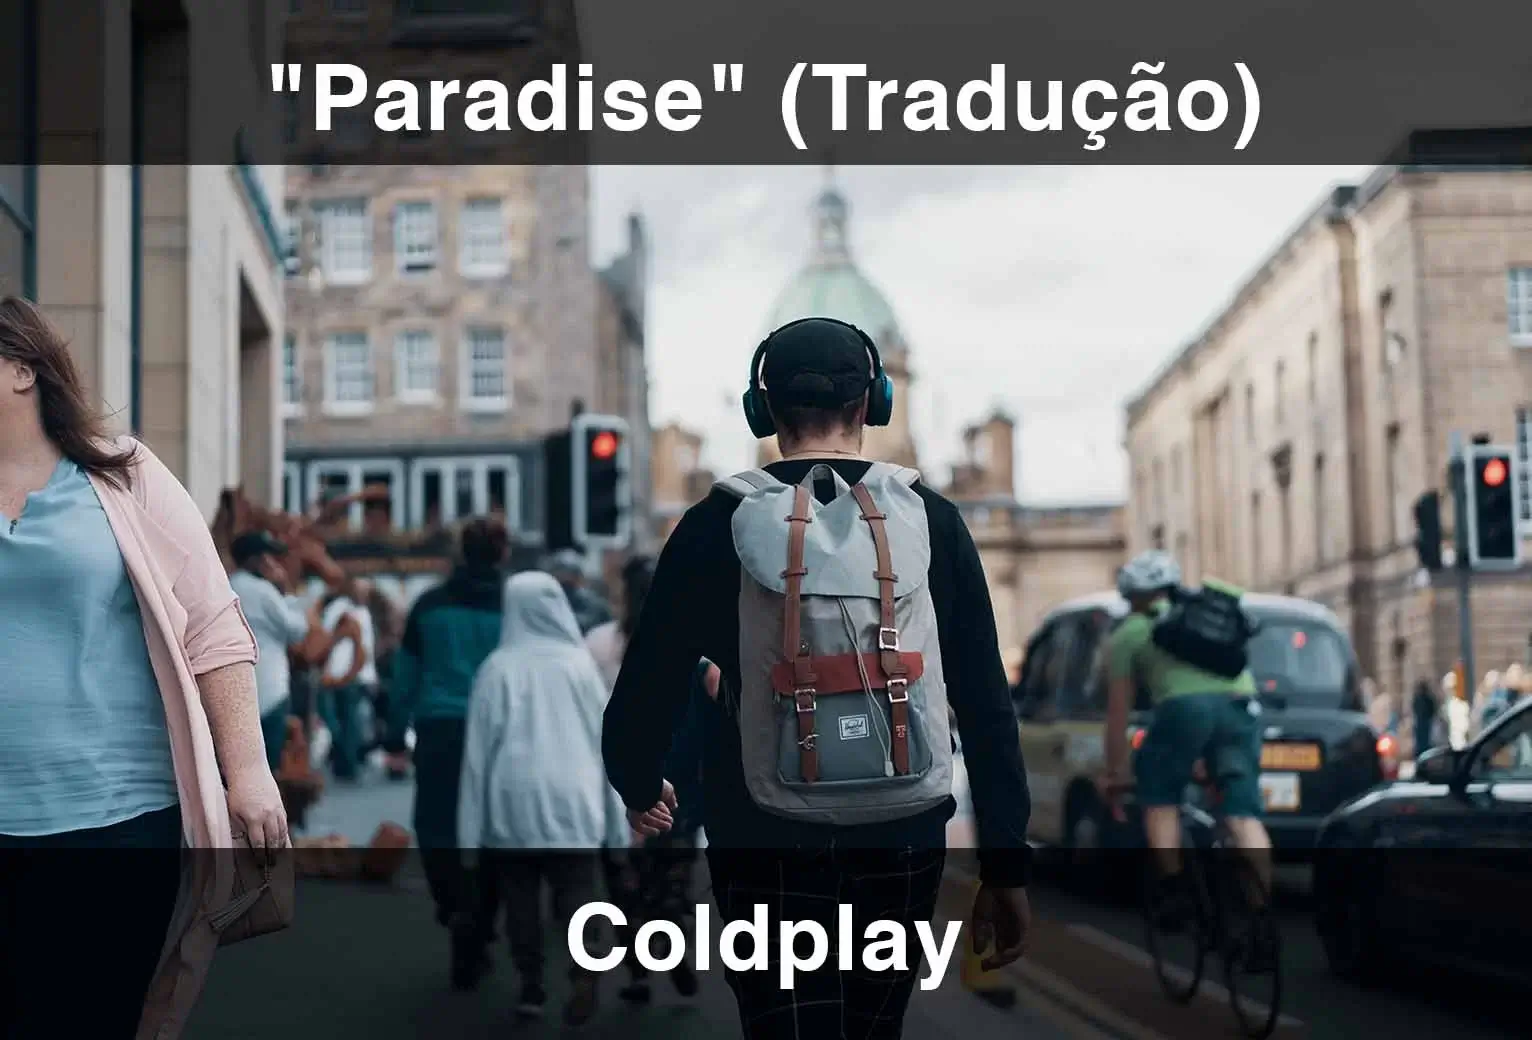 Paradise (tradução) - Coldplay - VAGALUME